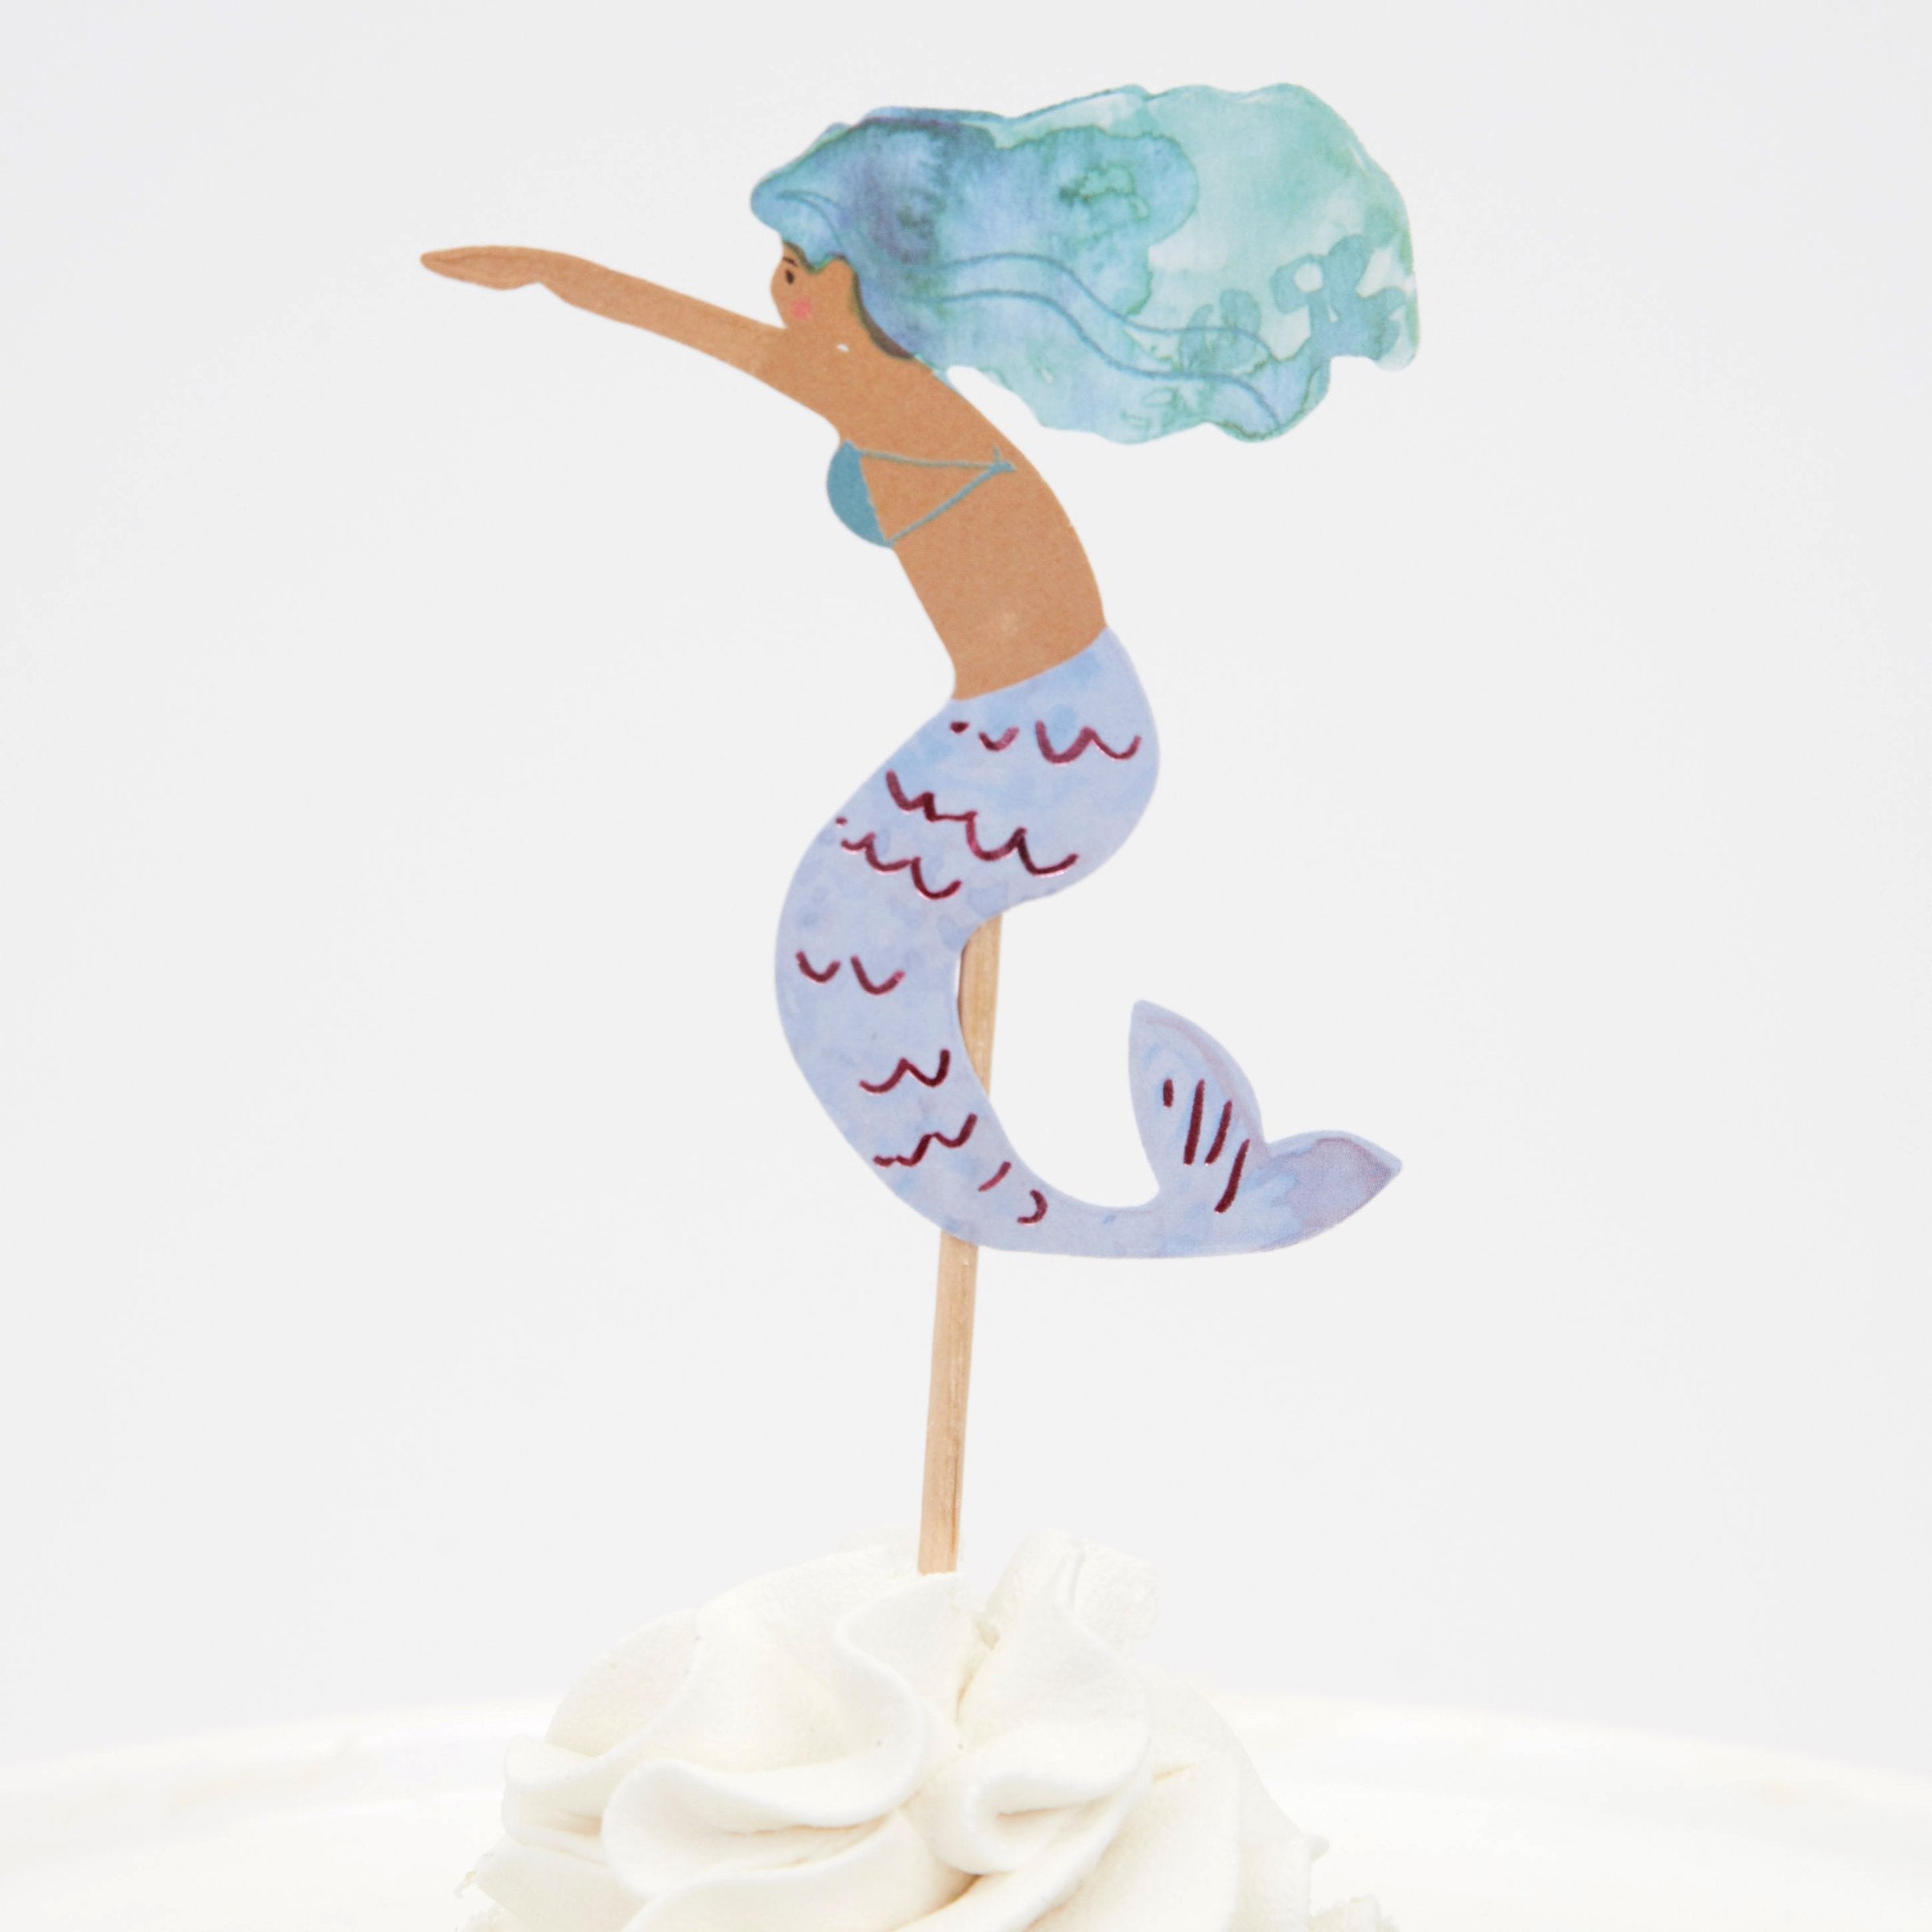 Mermaid Cupcake Kit